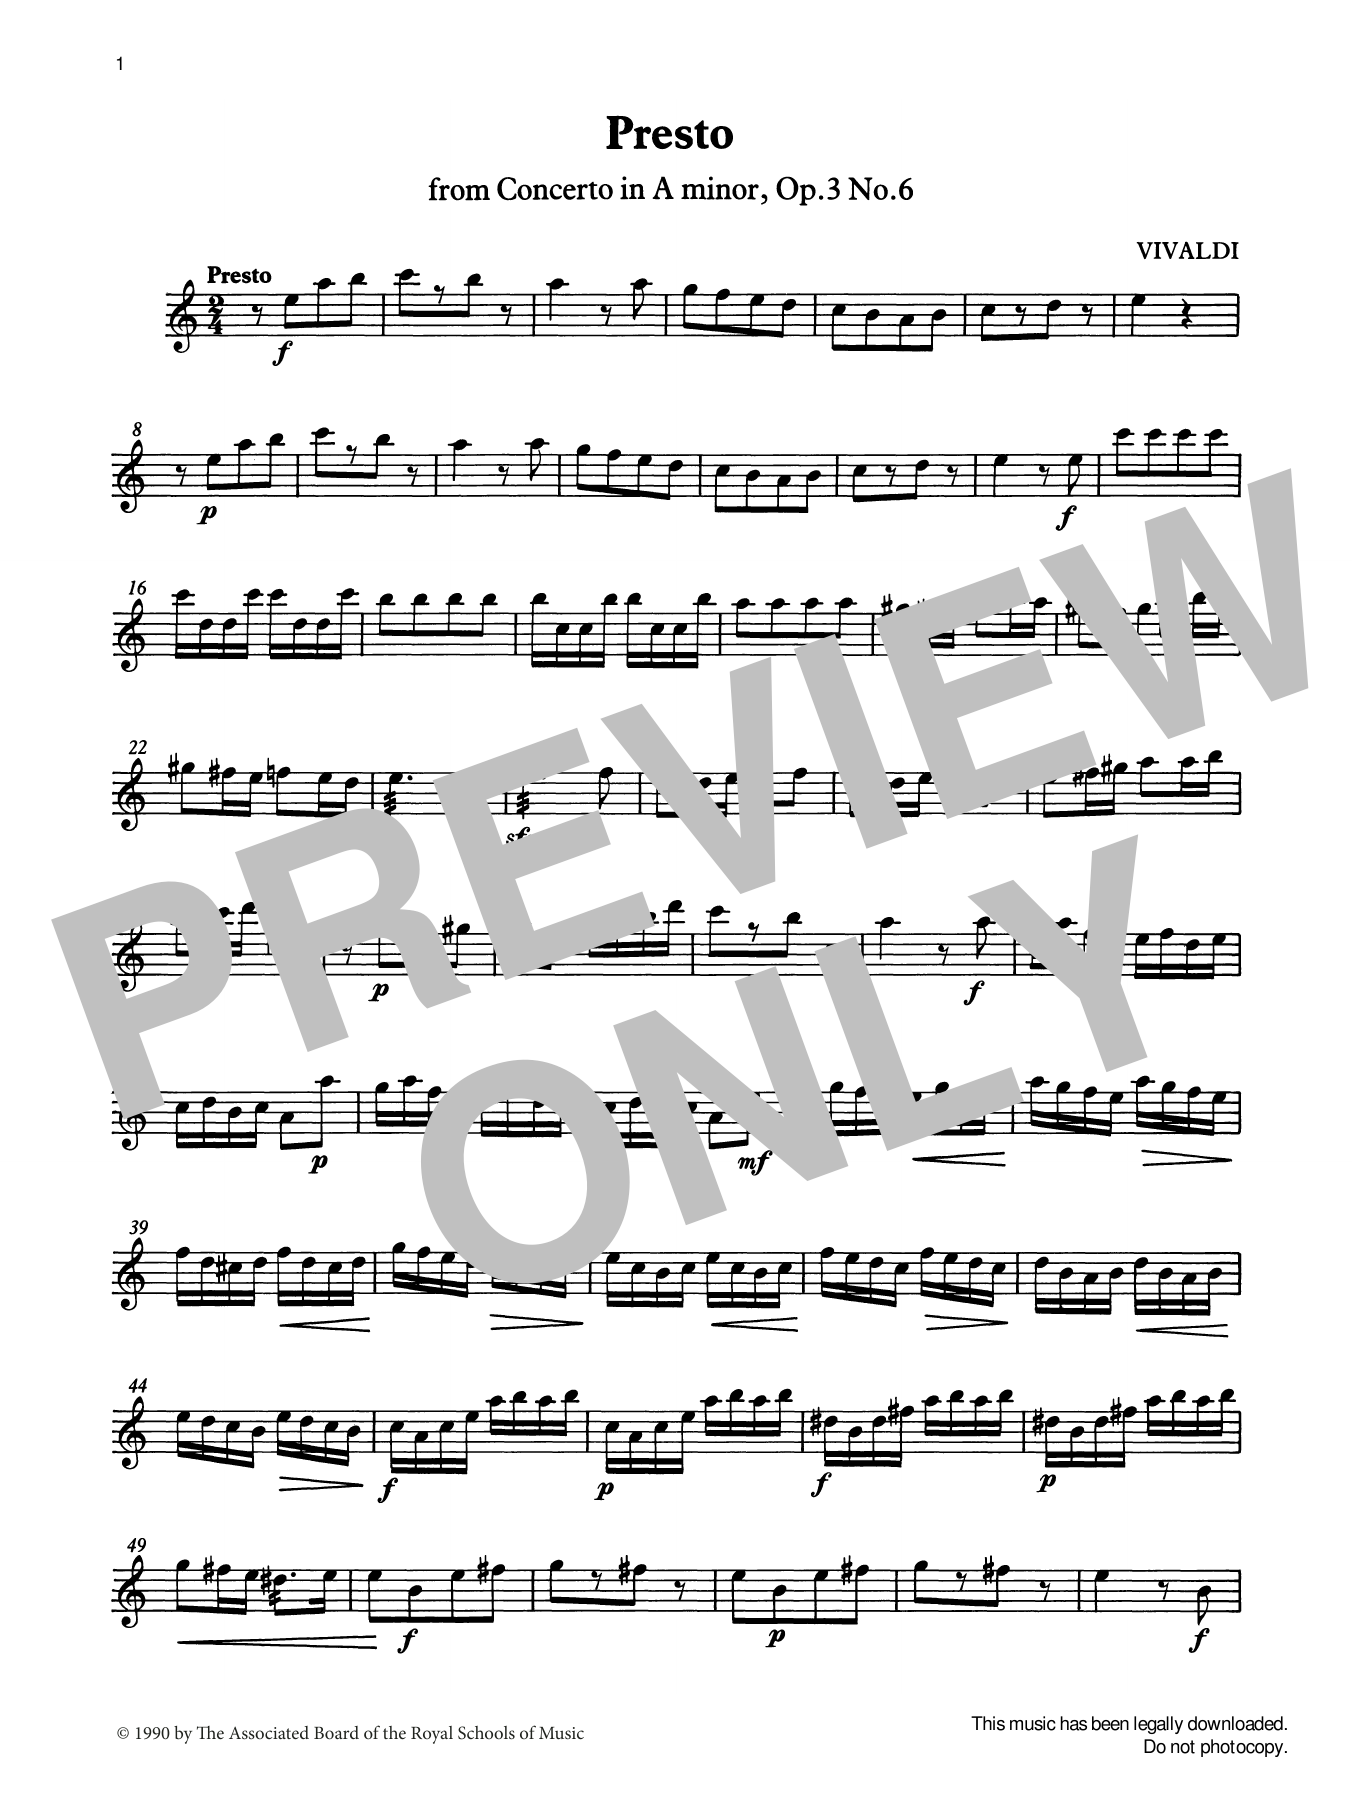 Antonio Vivaldi Presto (score & part) from Graded Music for Tuned Percussion, Book IV Sheet Music Notes & Chords for Percussion Solo - Download or Print PDF